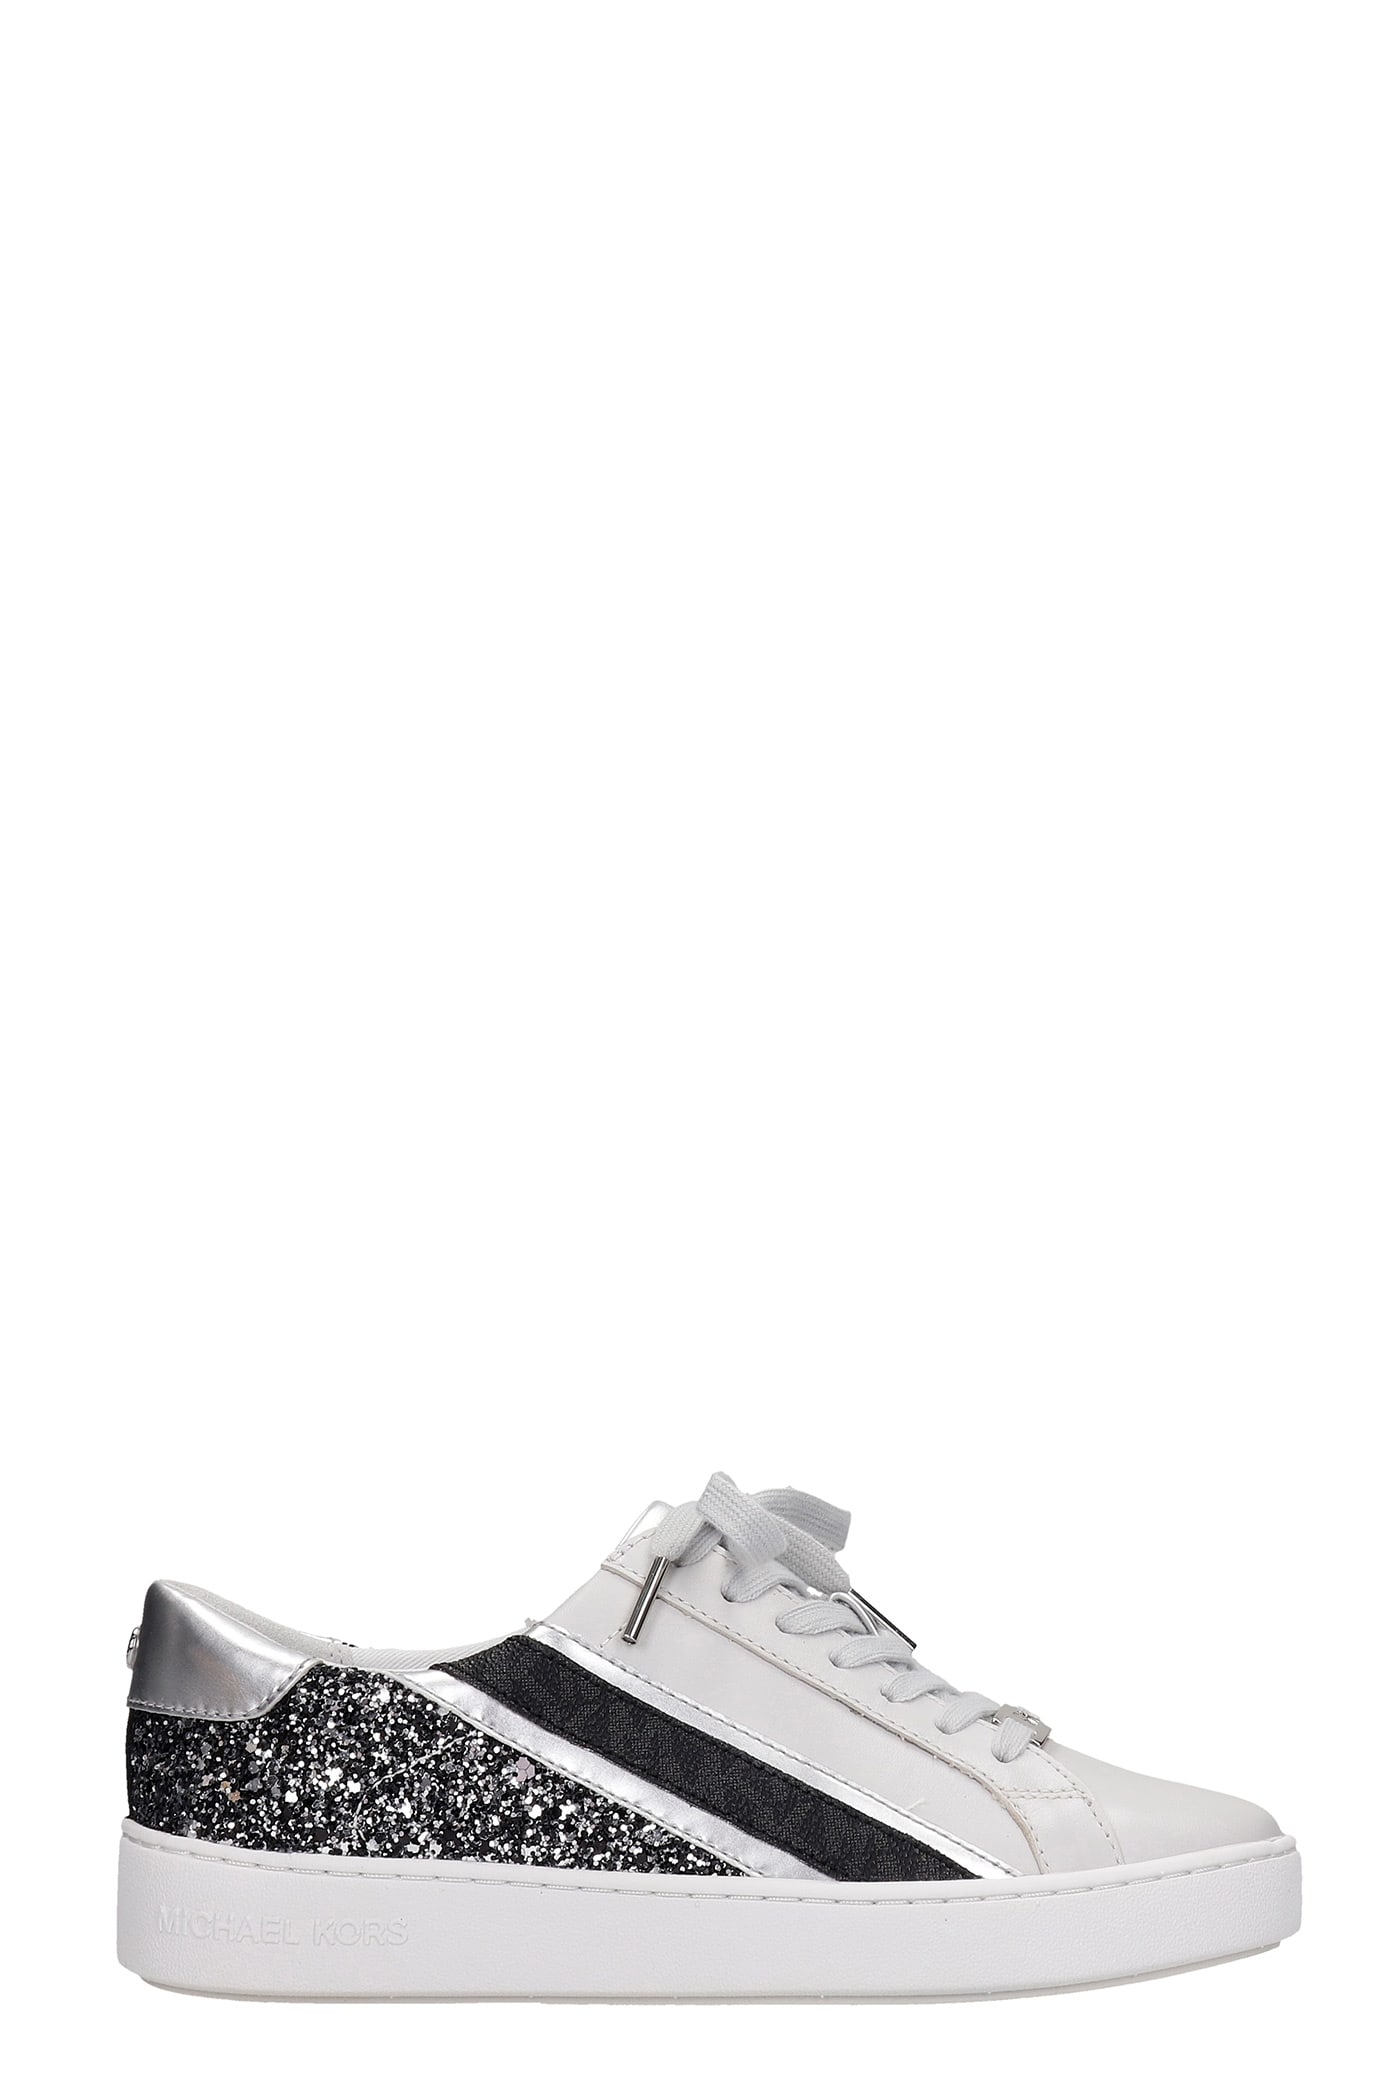 Michael Kors Slate Sneakers In Grey Leather